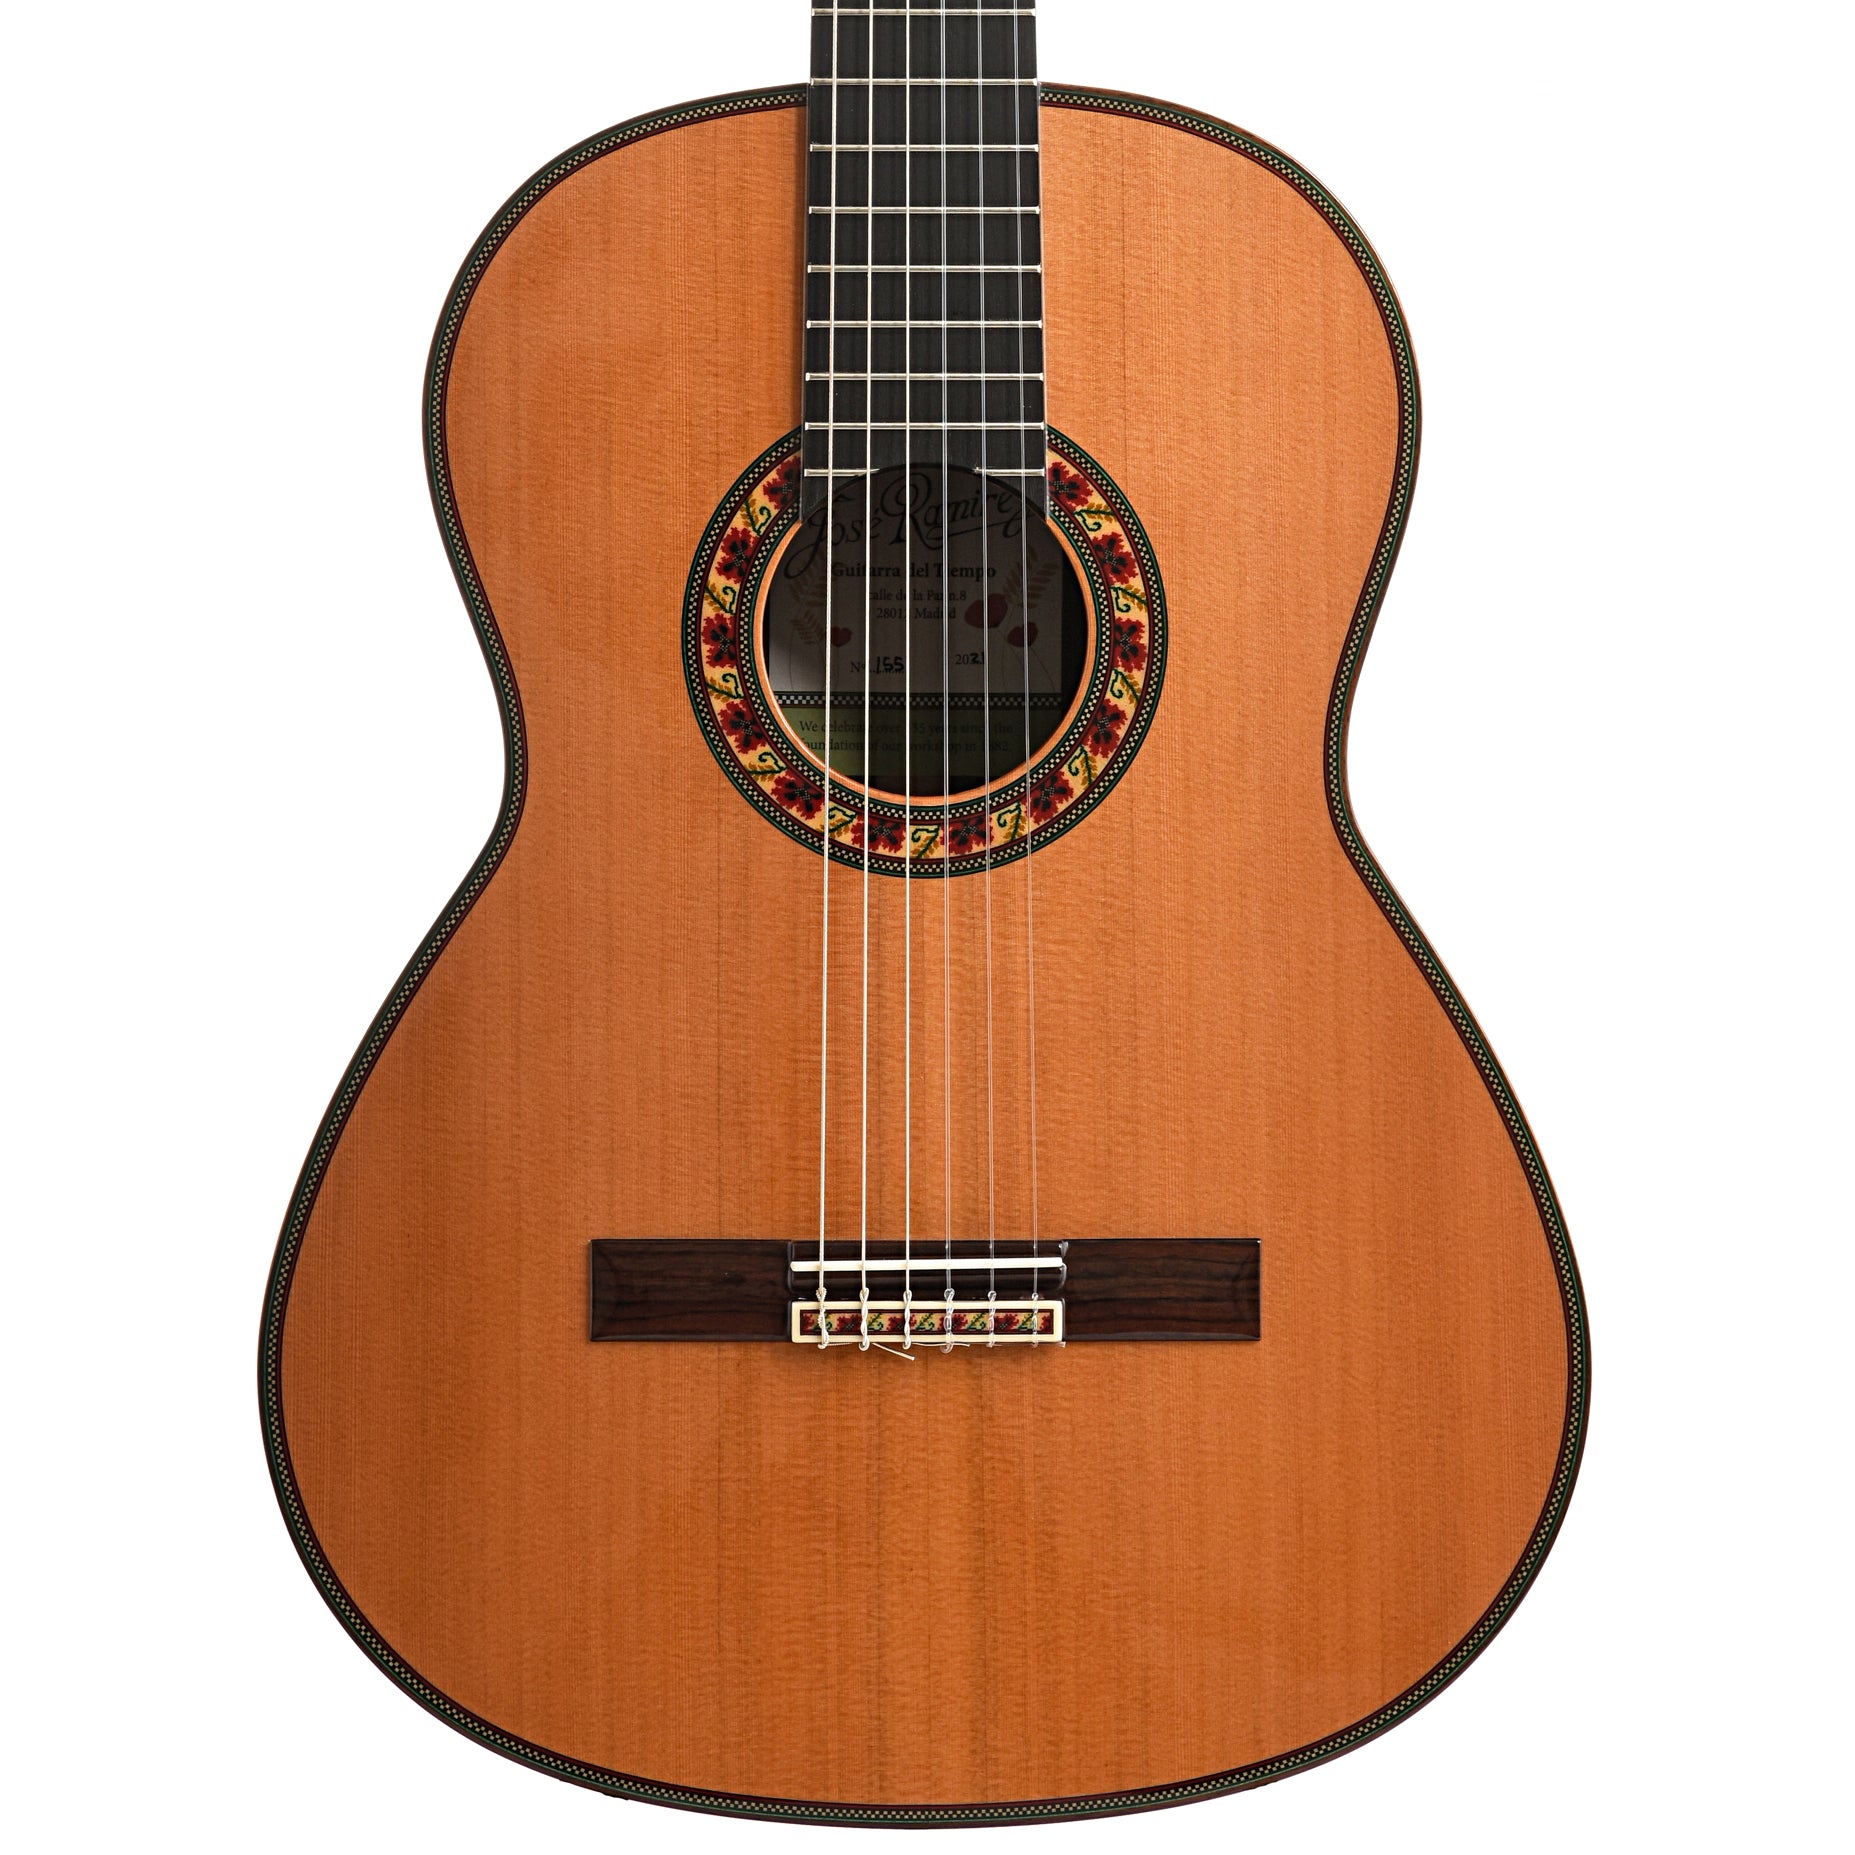 Image 2 of Jose Ramirez Guitarra Del Tiempo Classical Guitar and Case, Cedar Top Model - SKU# RAMDELTC : Product Type Classical & Flamenco Guitars : Elderly Instruments